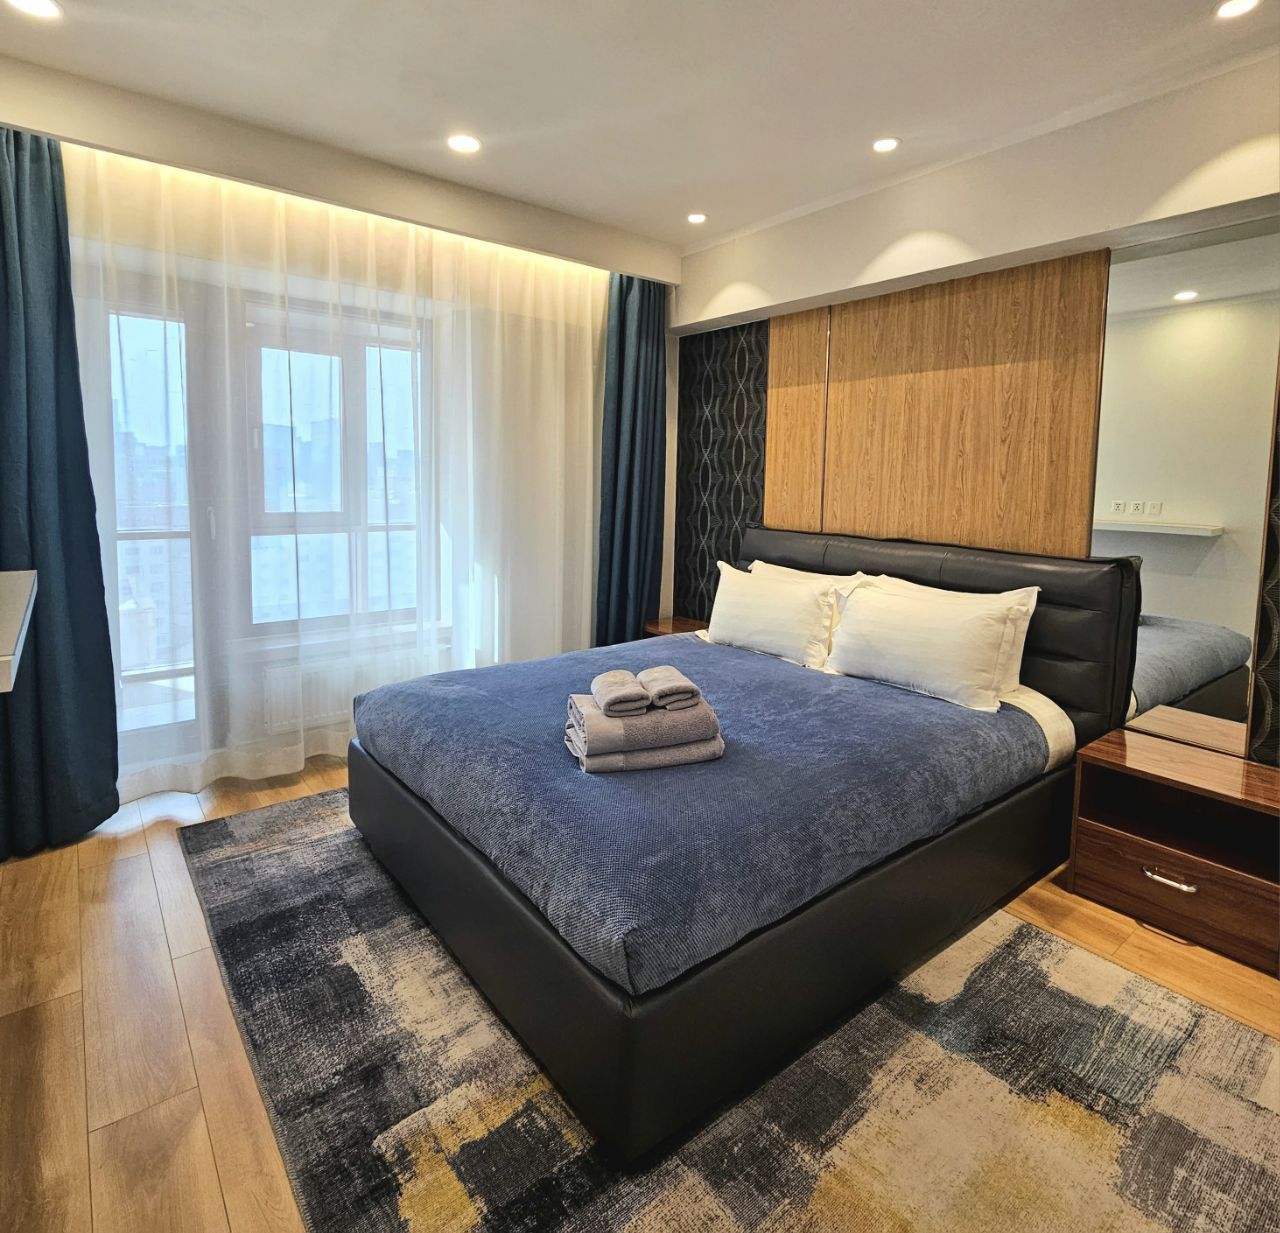 ONE - BEDROOM DELUXE APARTMENT | One-bedroom deluxe apartments in ...